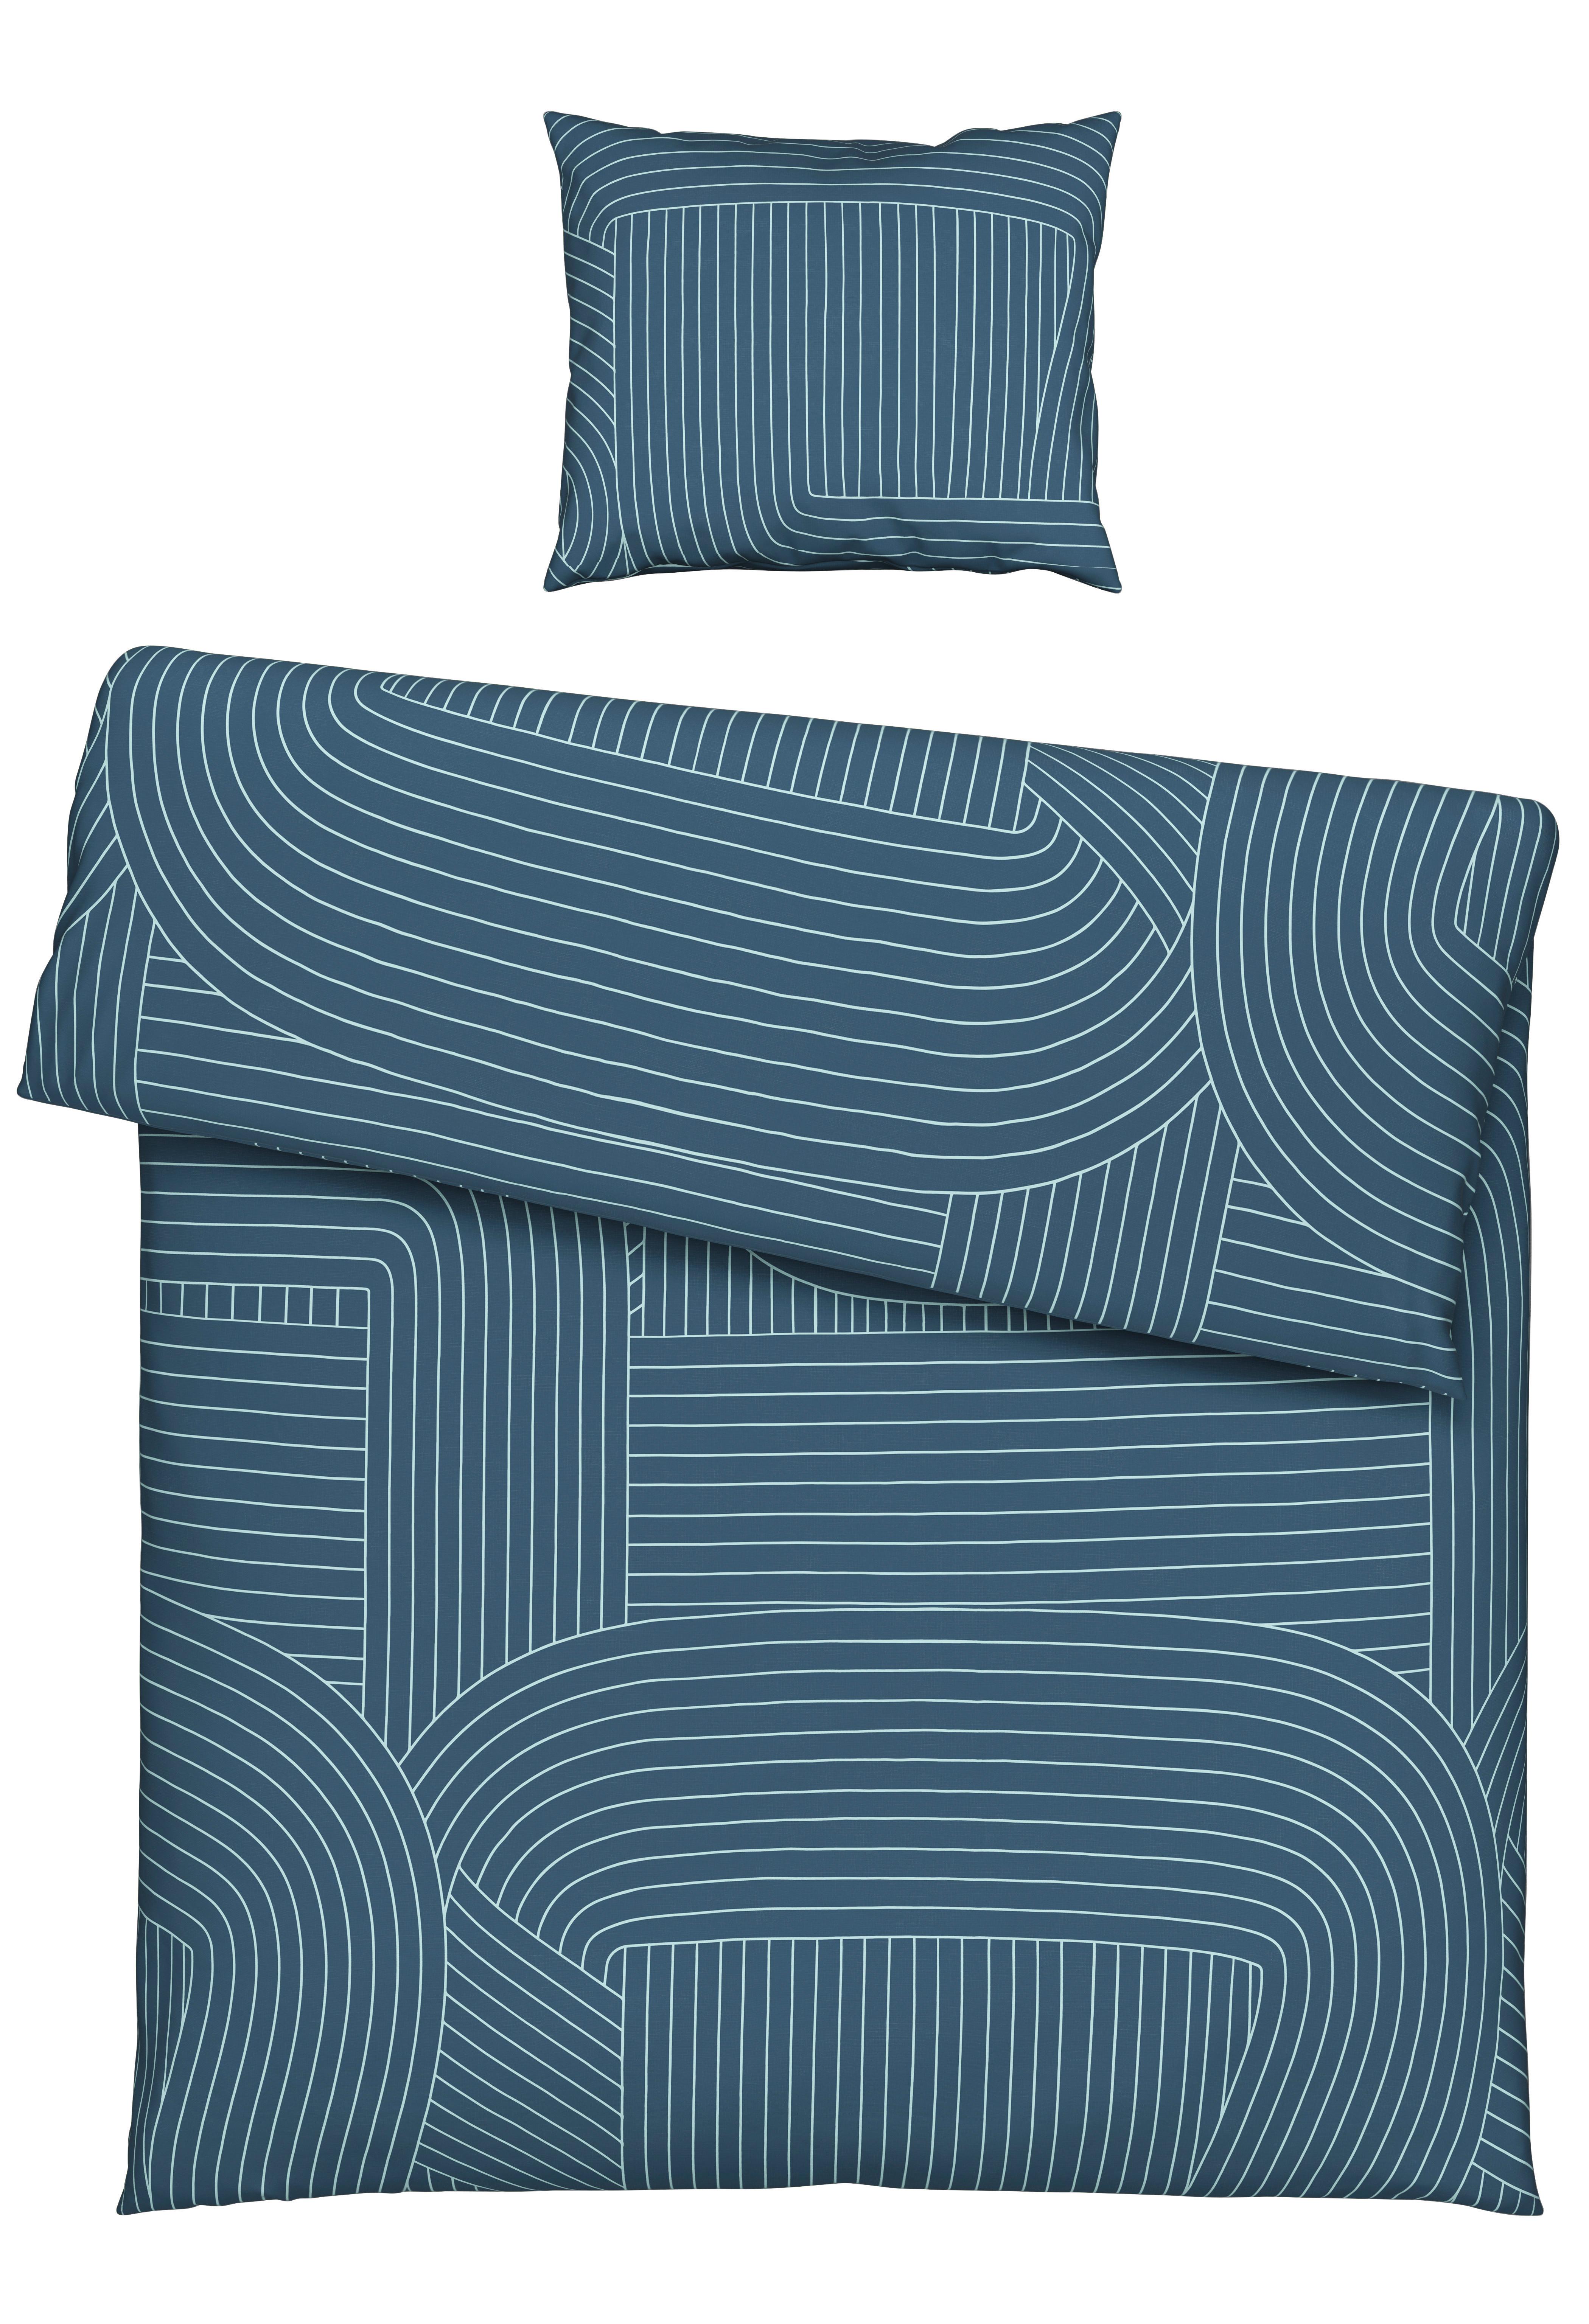 Bettwäsche Scribble ca. 160x210cm - Blau, Modern, Textil (160/210cm) - Modern Living